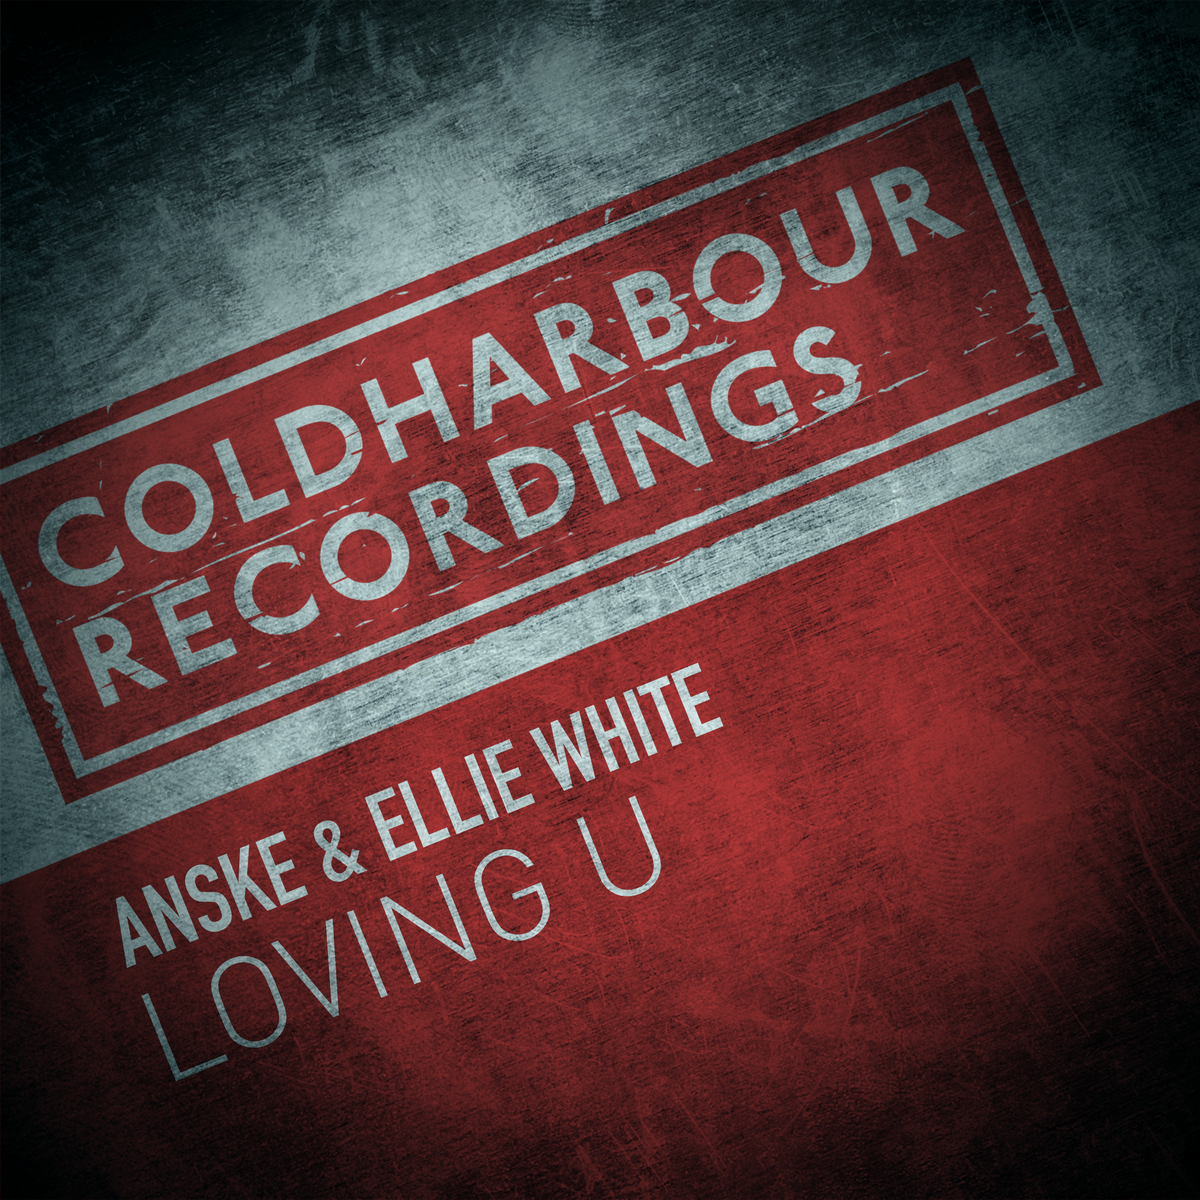 Anske & Ellie White - "Loving U"